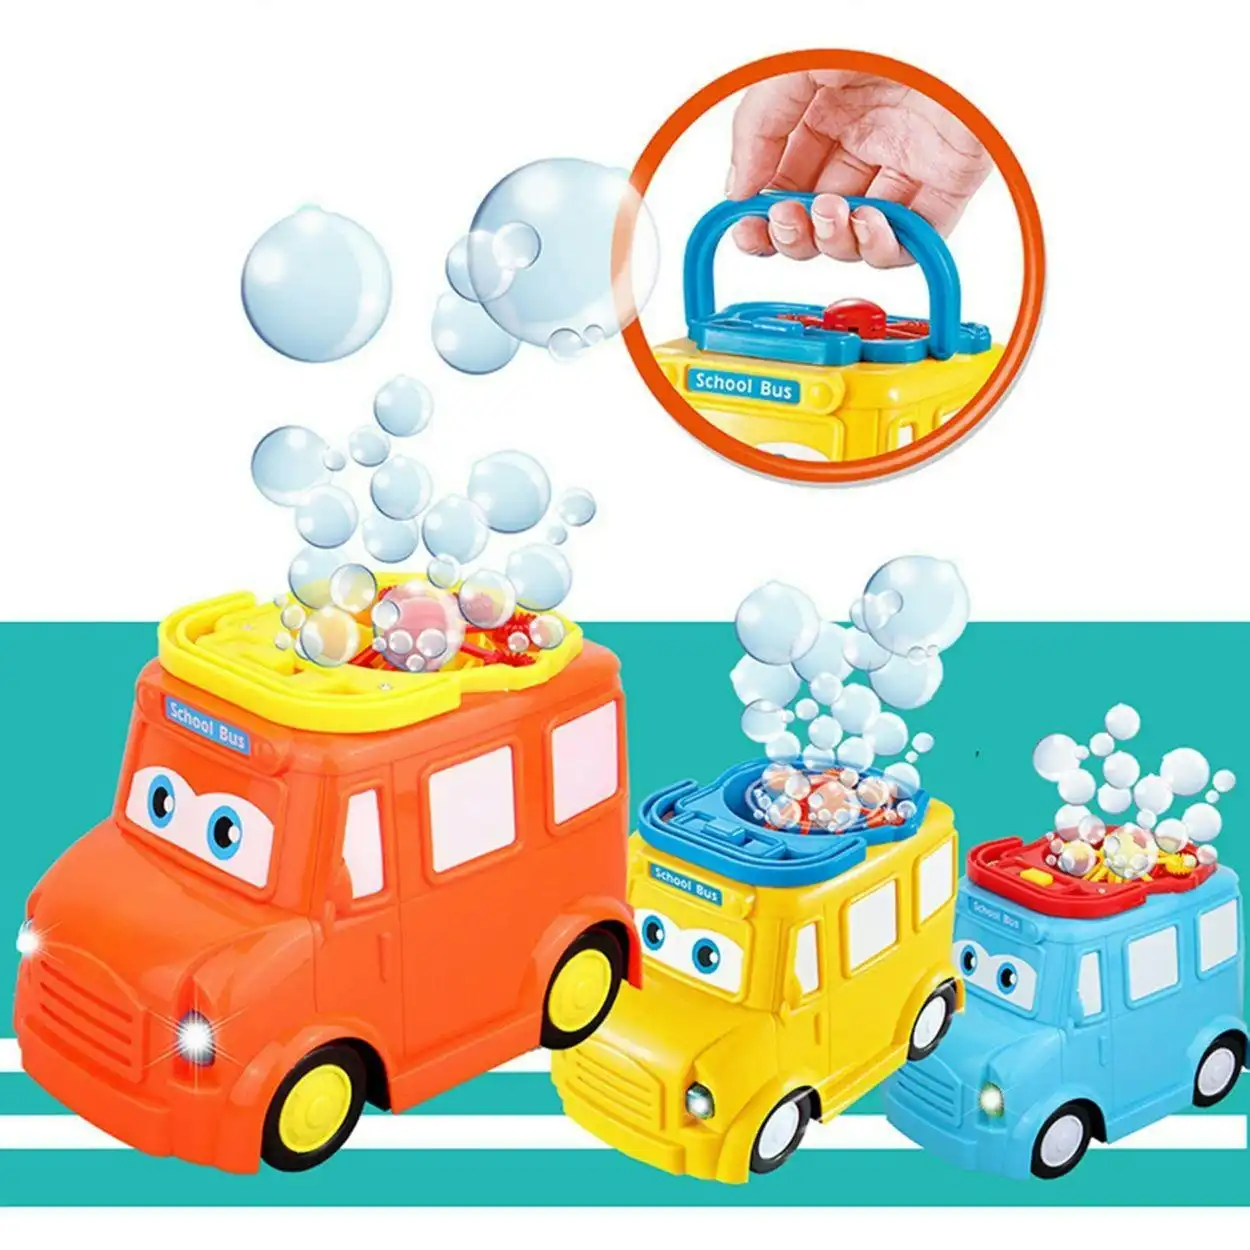 Kidst Bubble Toy School Bus Toy Bubble Maker & Bubble Blowing Kids Fun Toy